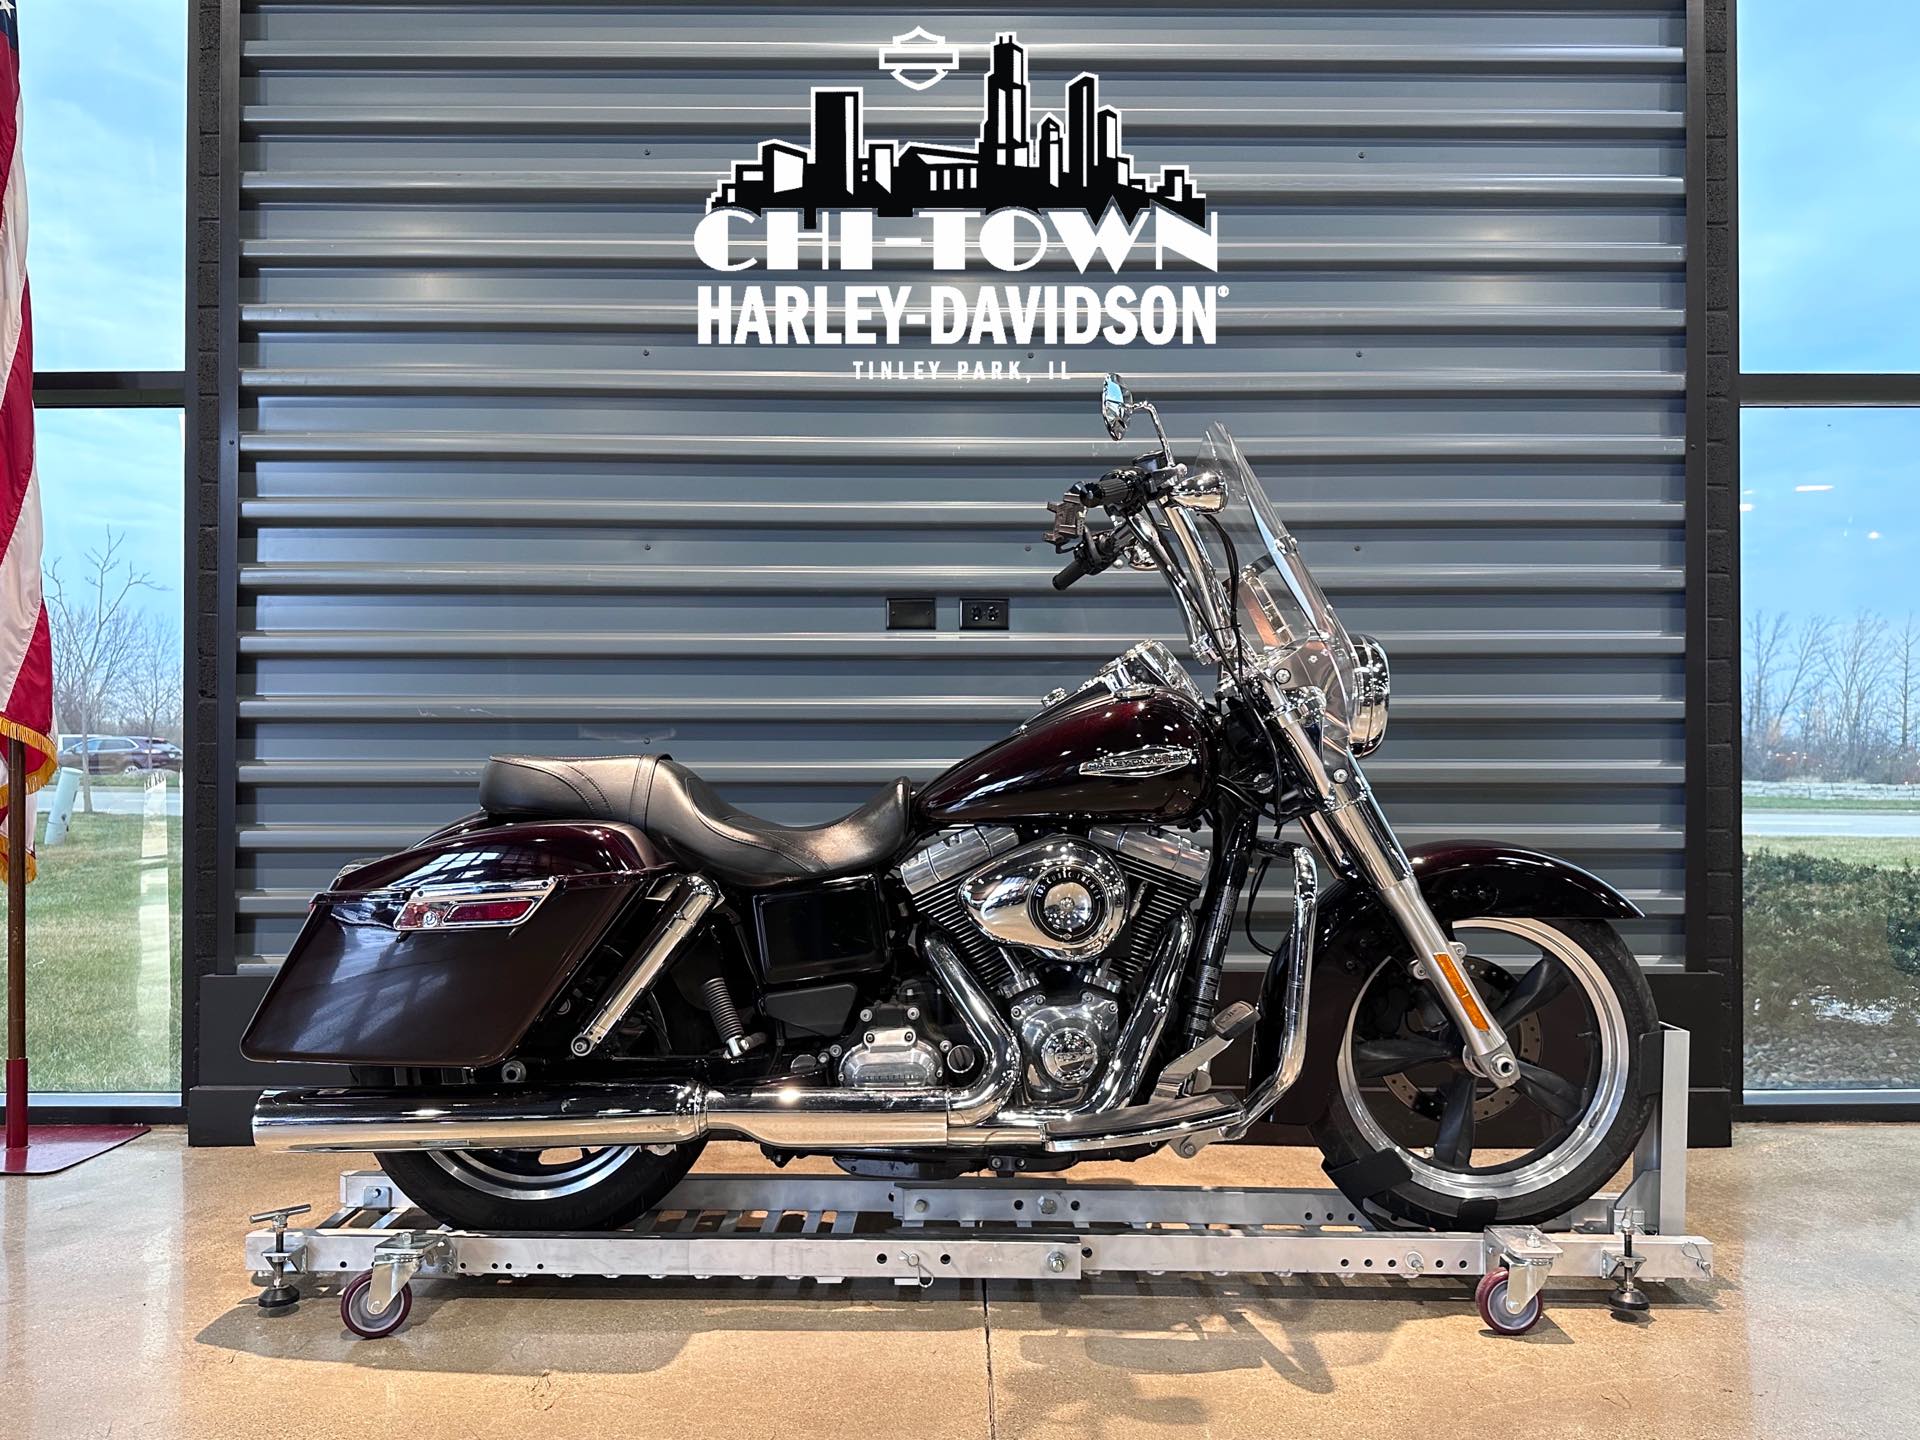 2014 Harley-Davidson Dyna Switchback at Chi-Town Harley-Davidson